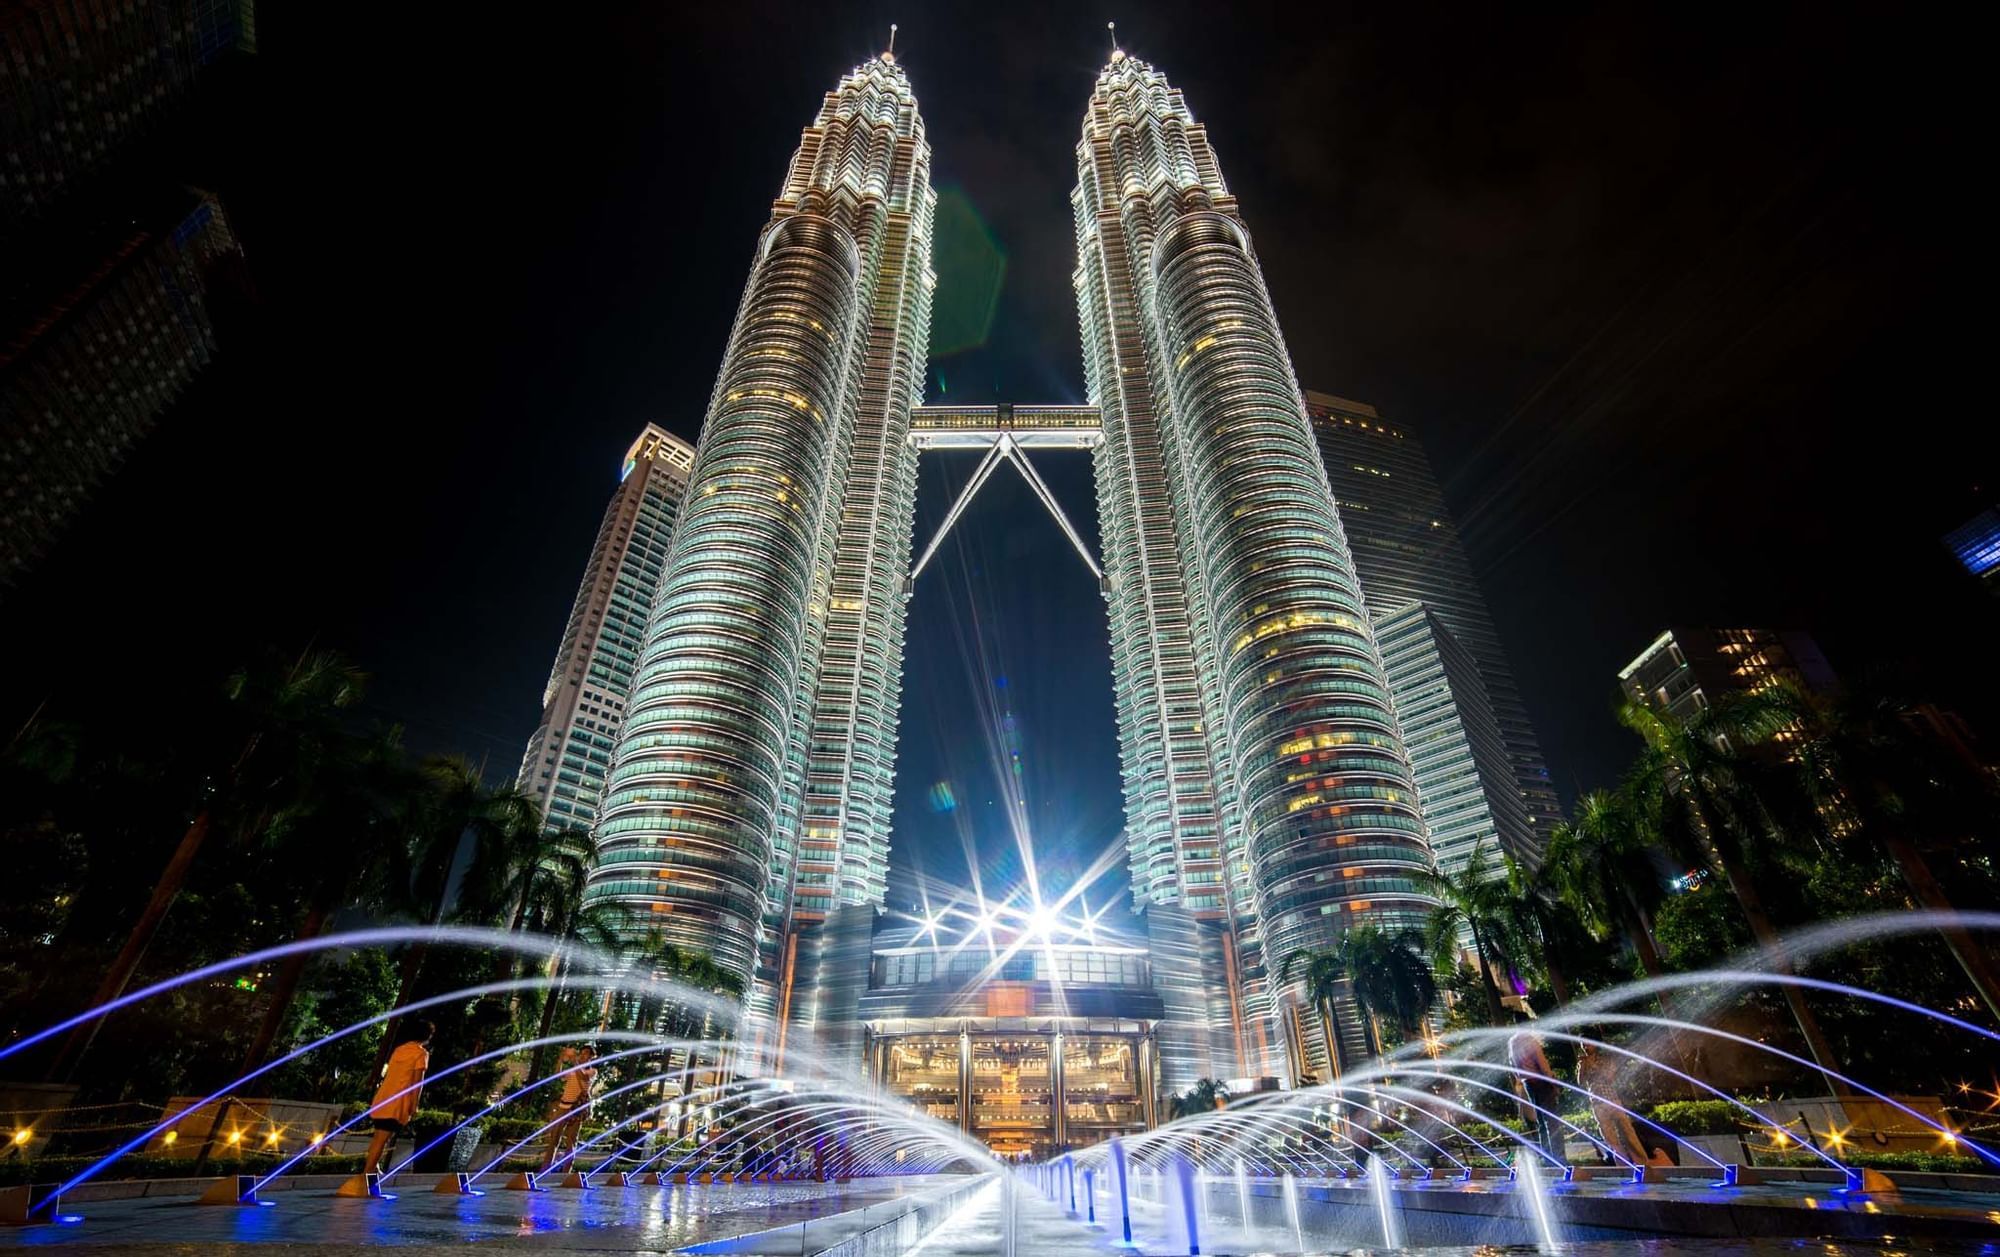 Petronas towers captured at night near Sunway Hotel Pyramid